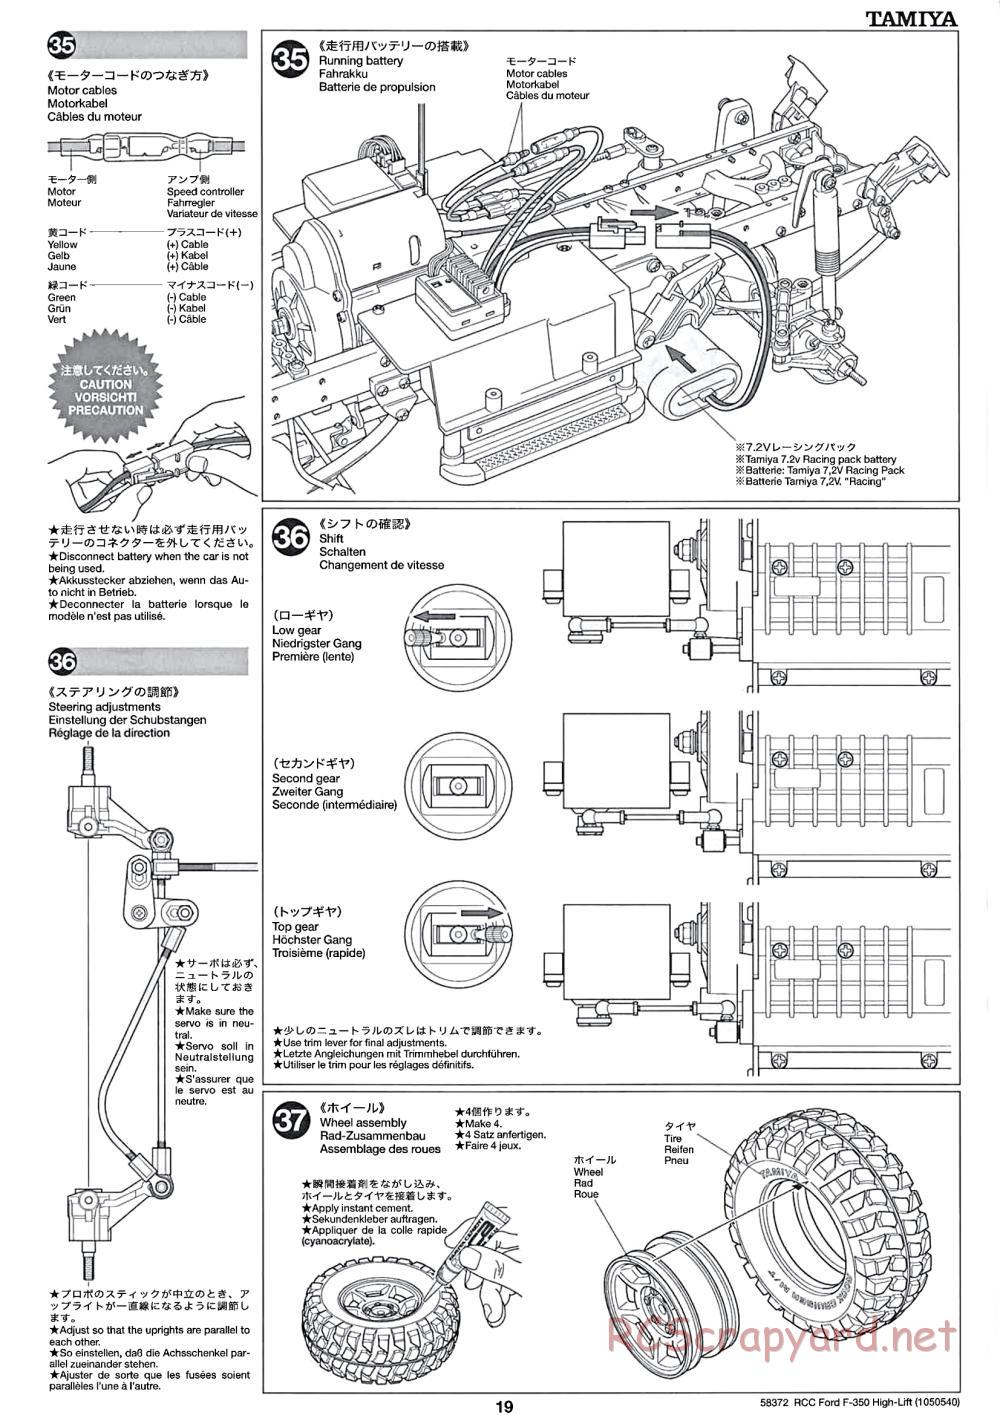 Tamiya - Ford F350 High-Lift Chassis - Manual - Page 19